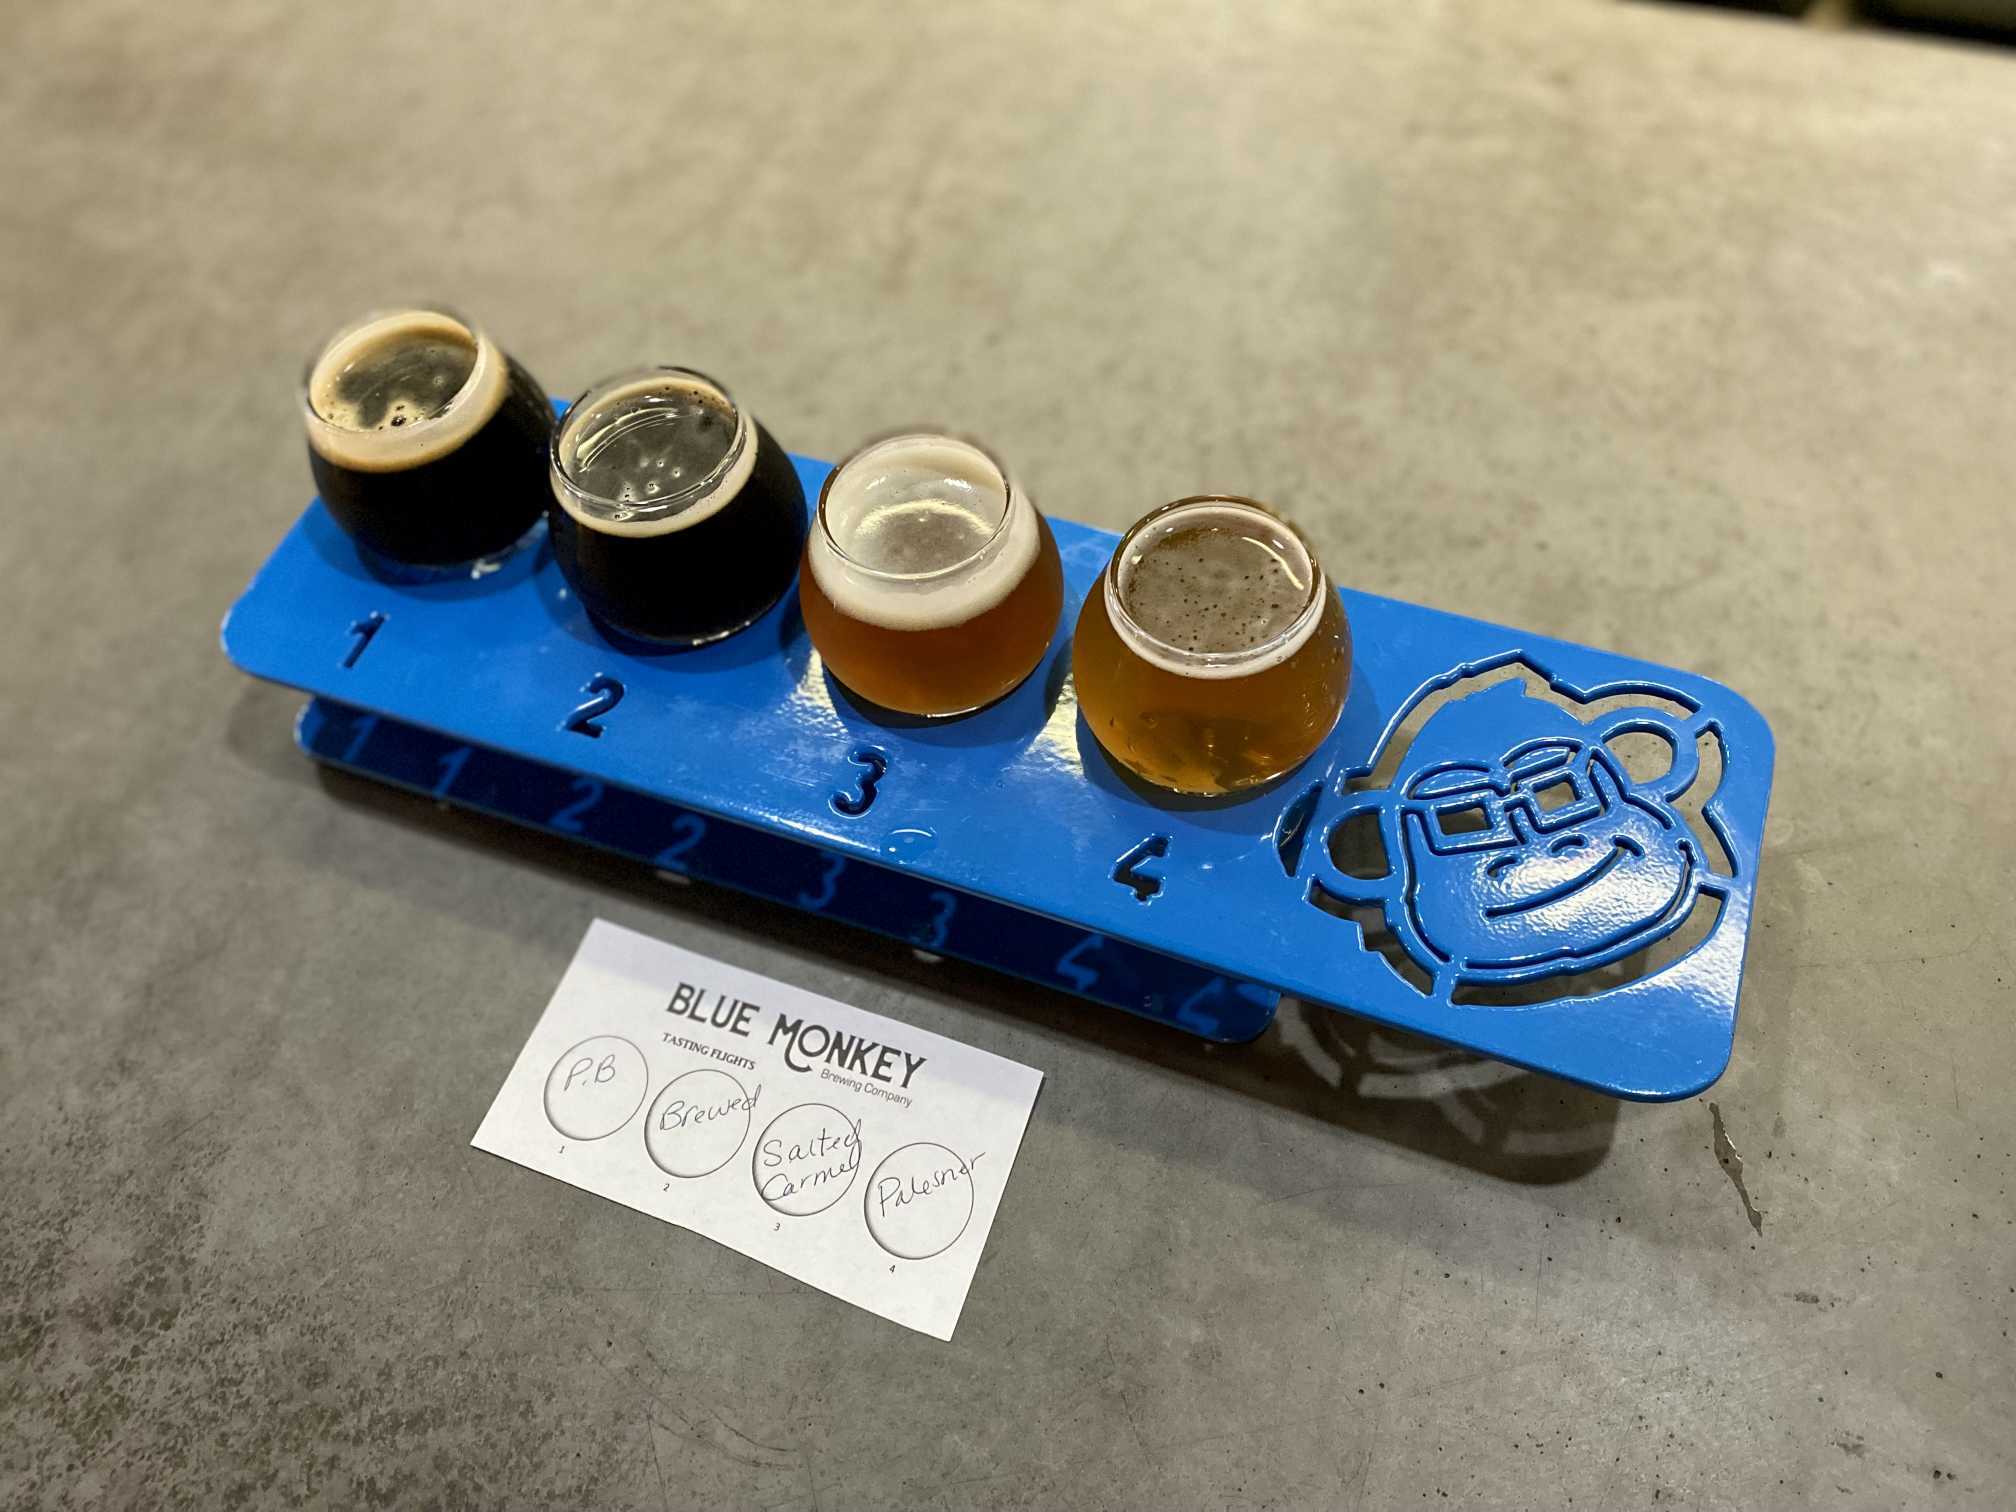 Blue Monkey Brewing Company